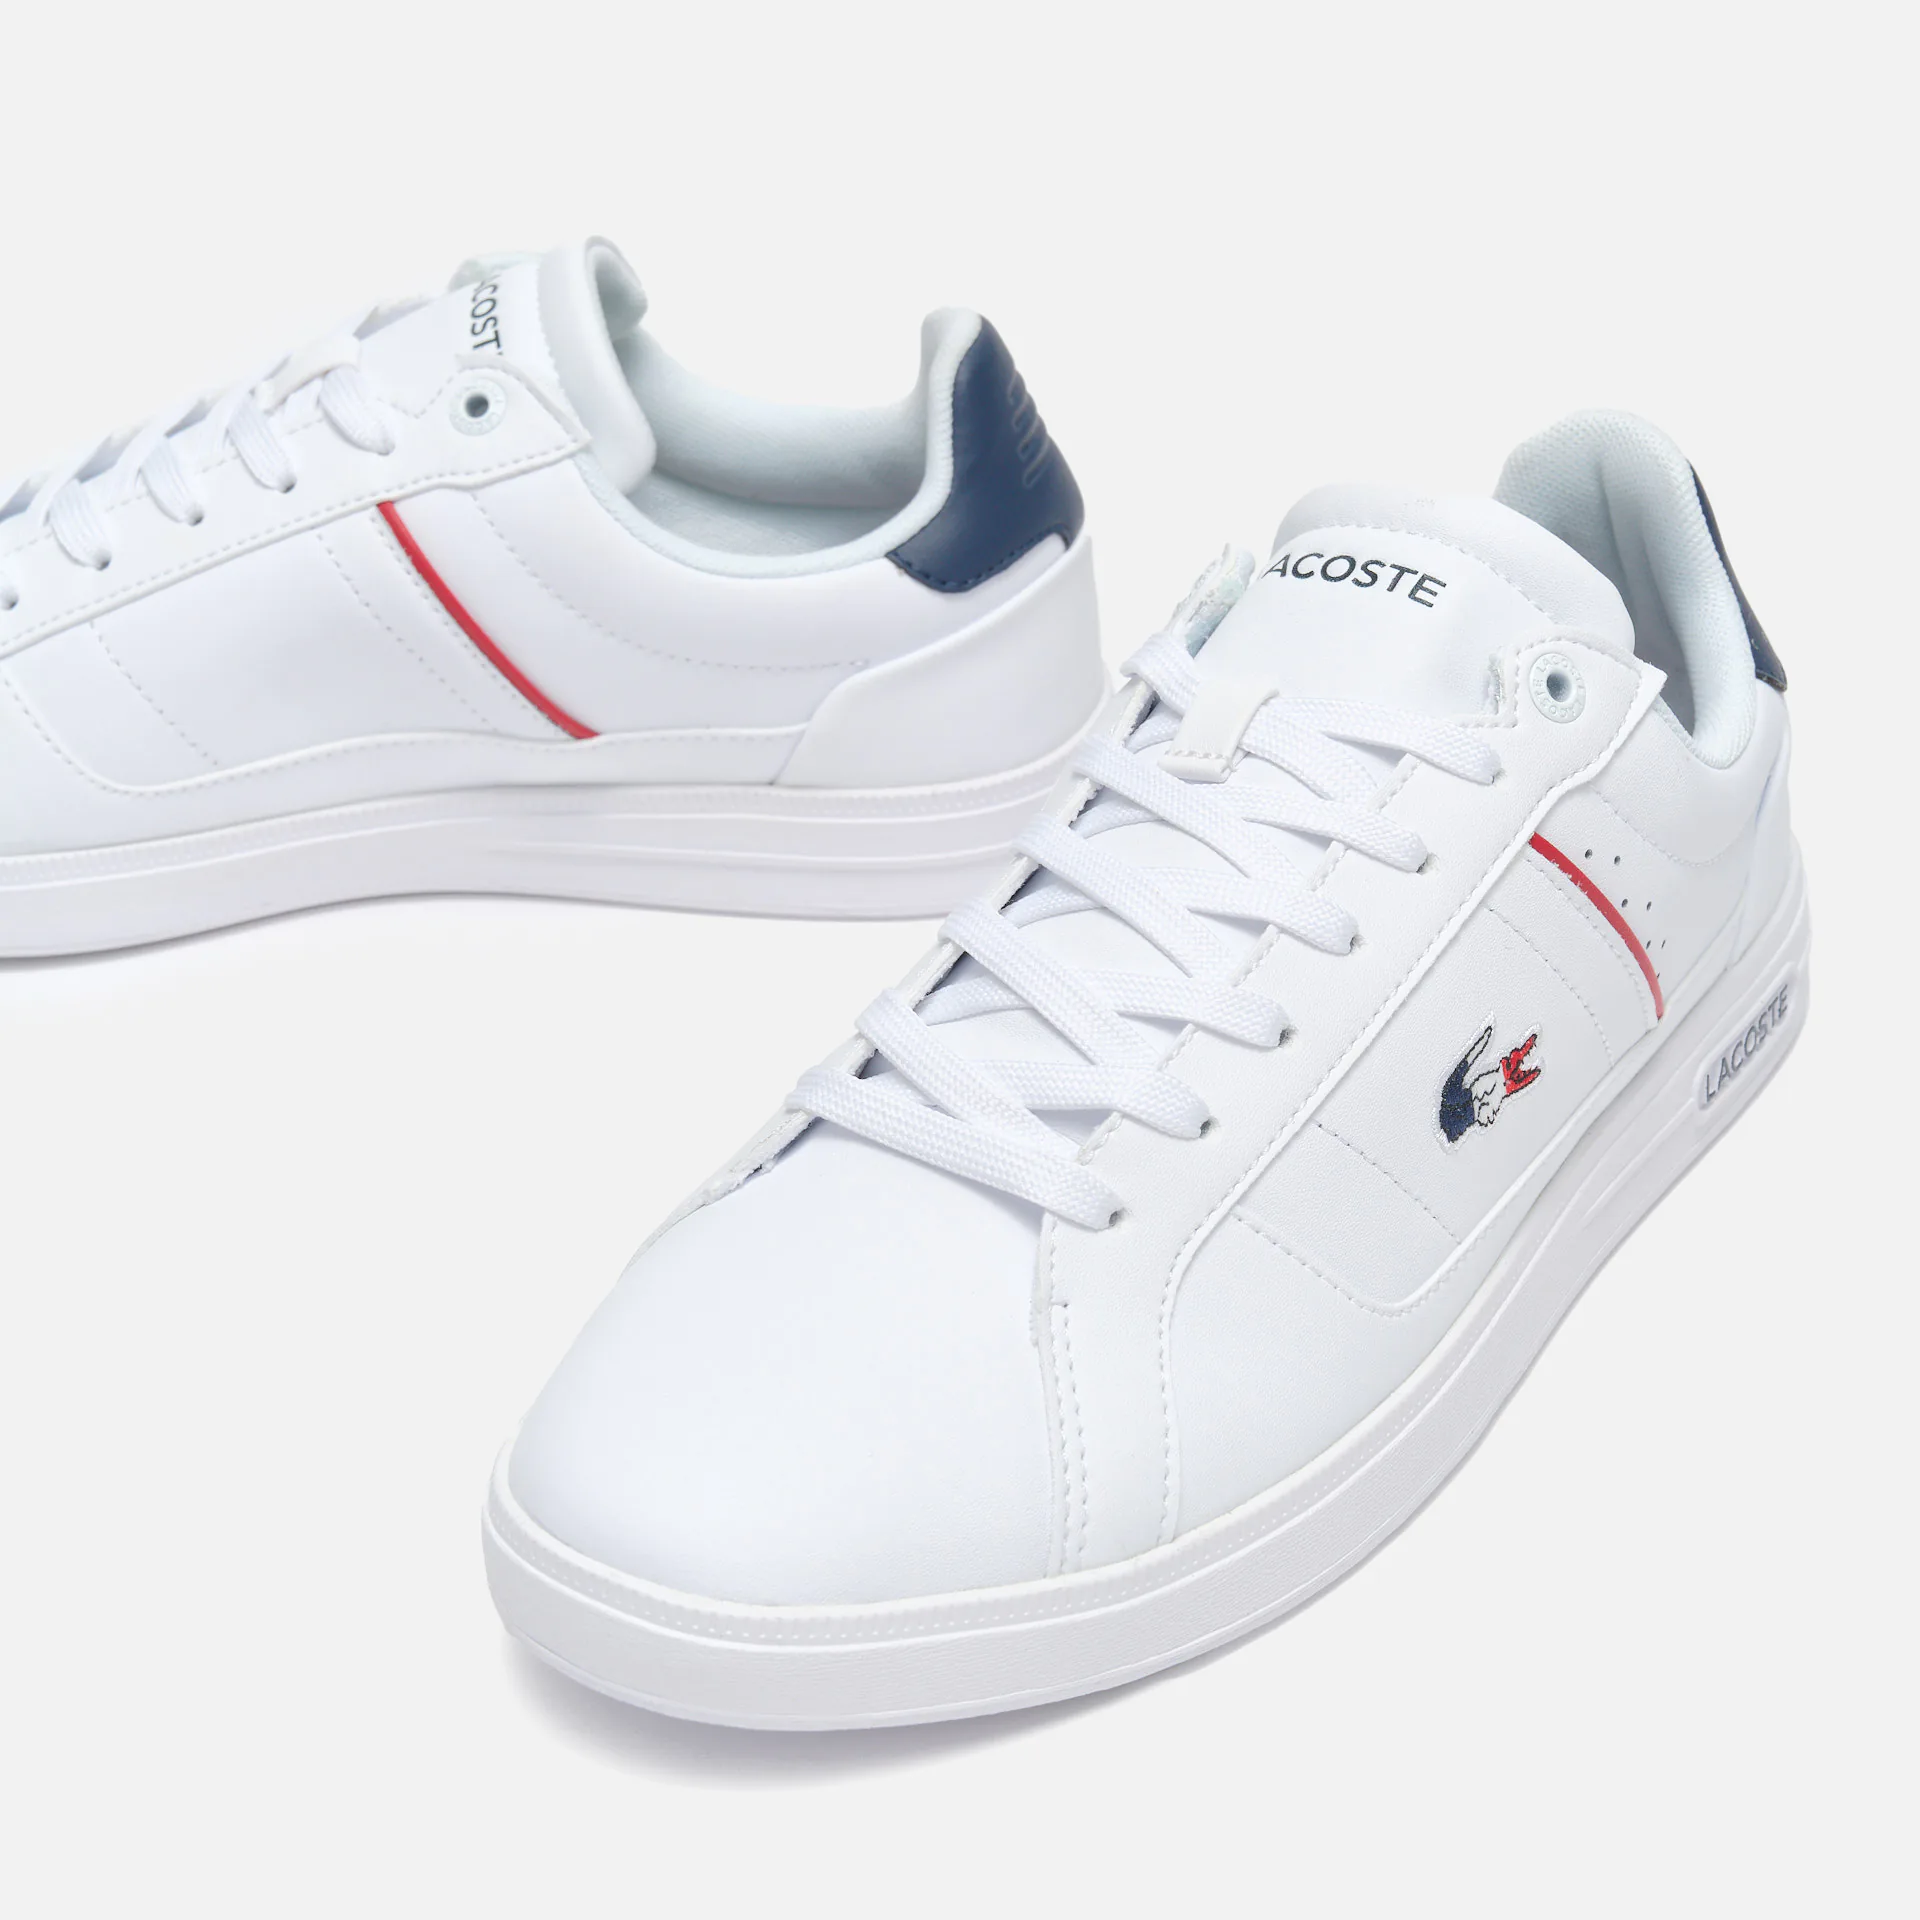 Lacoste Europa Pro Tri 123 1 SMA Sneaker White/Navy/Red